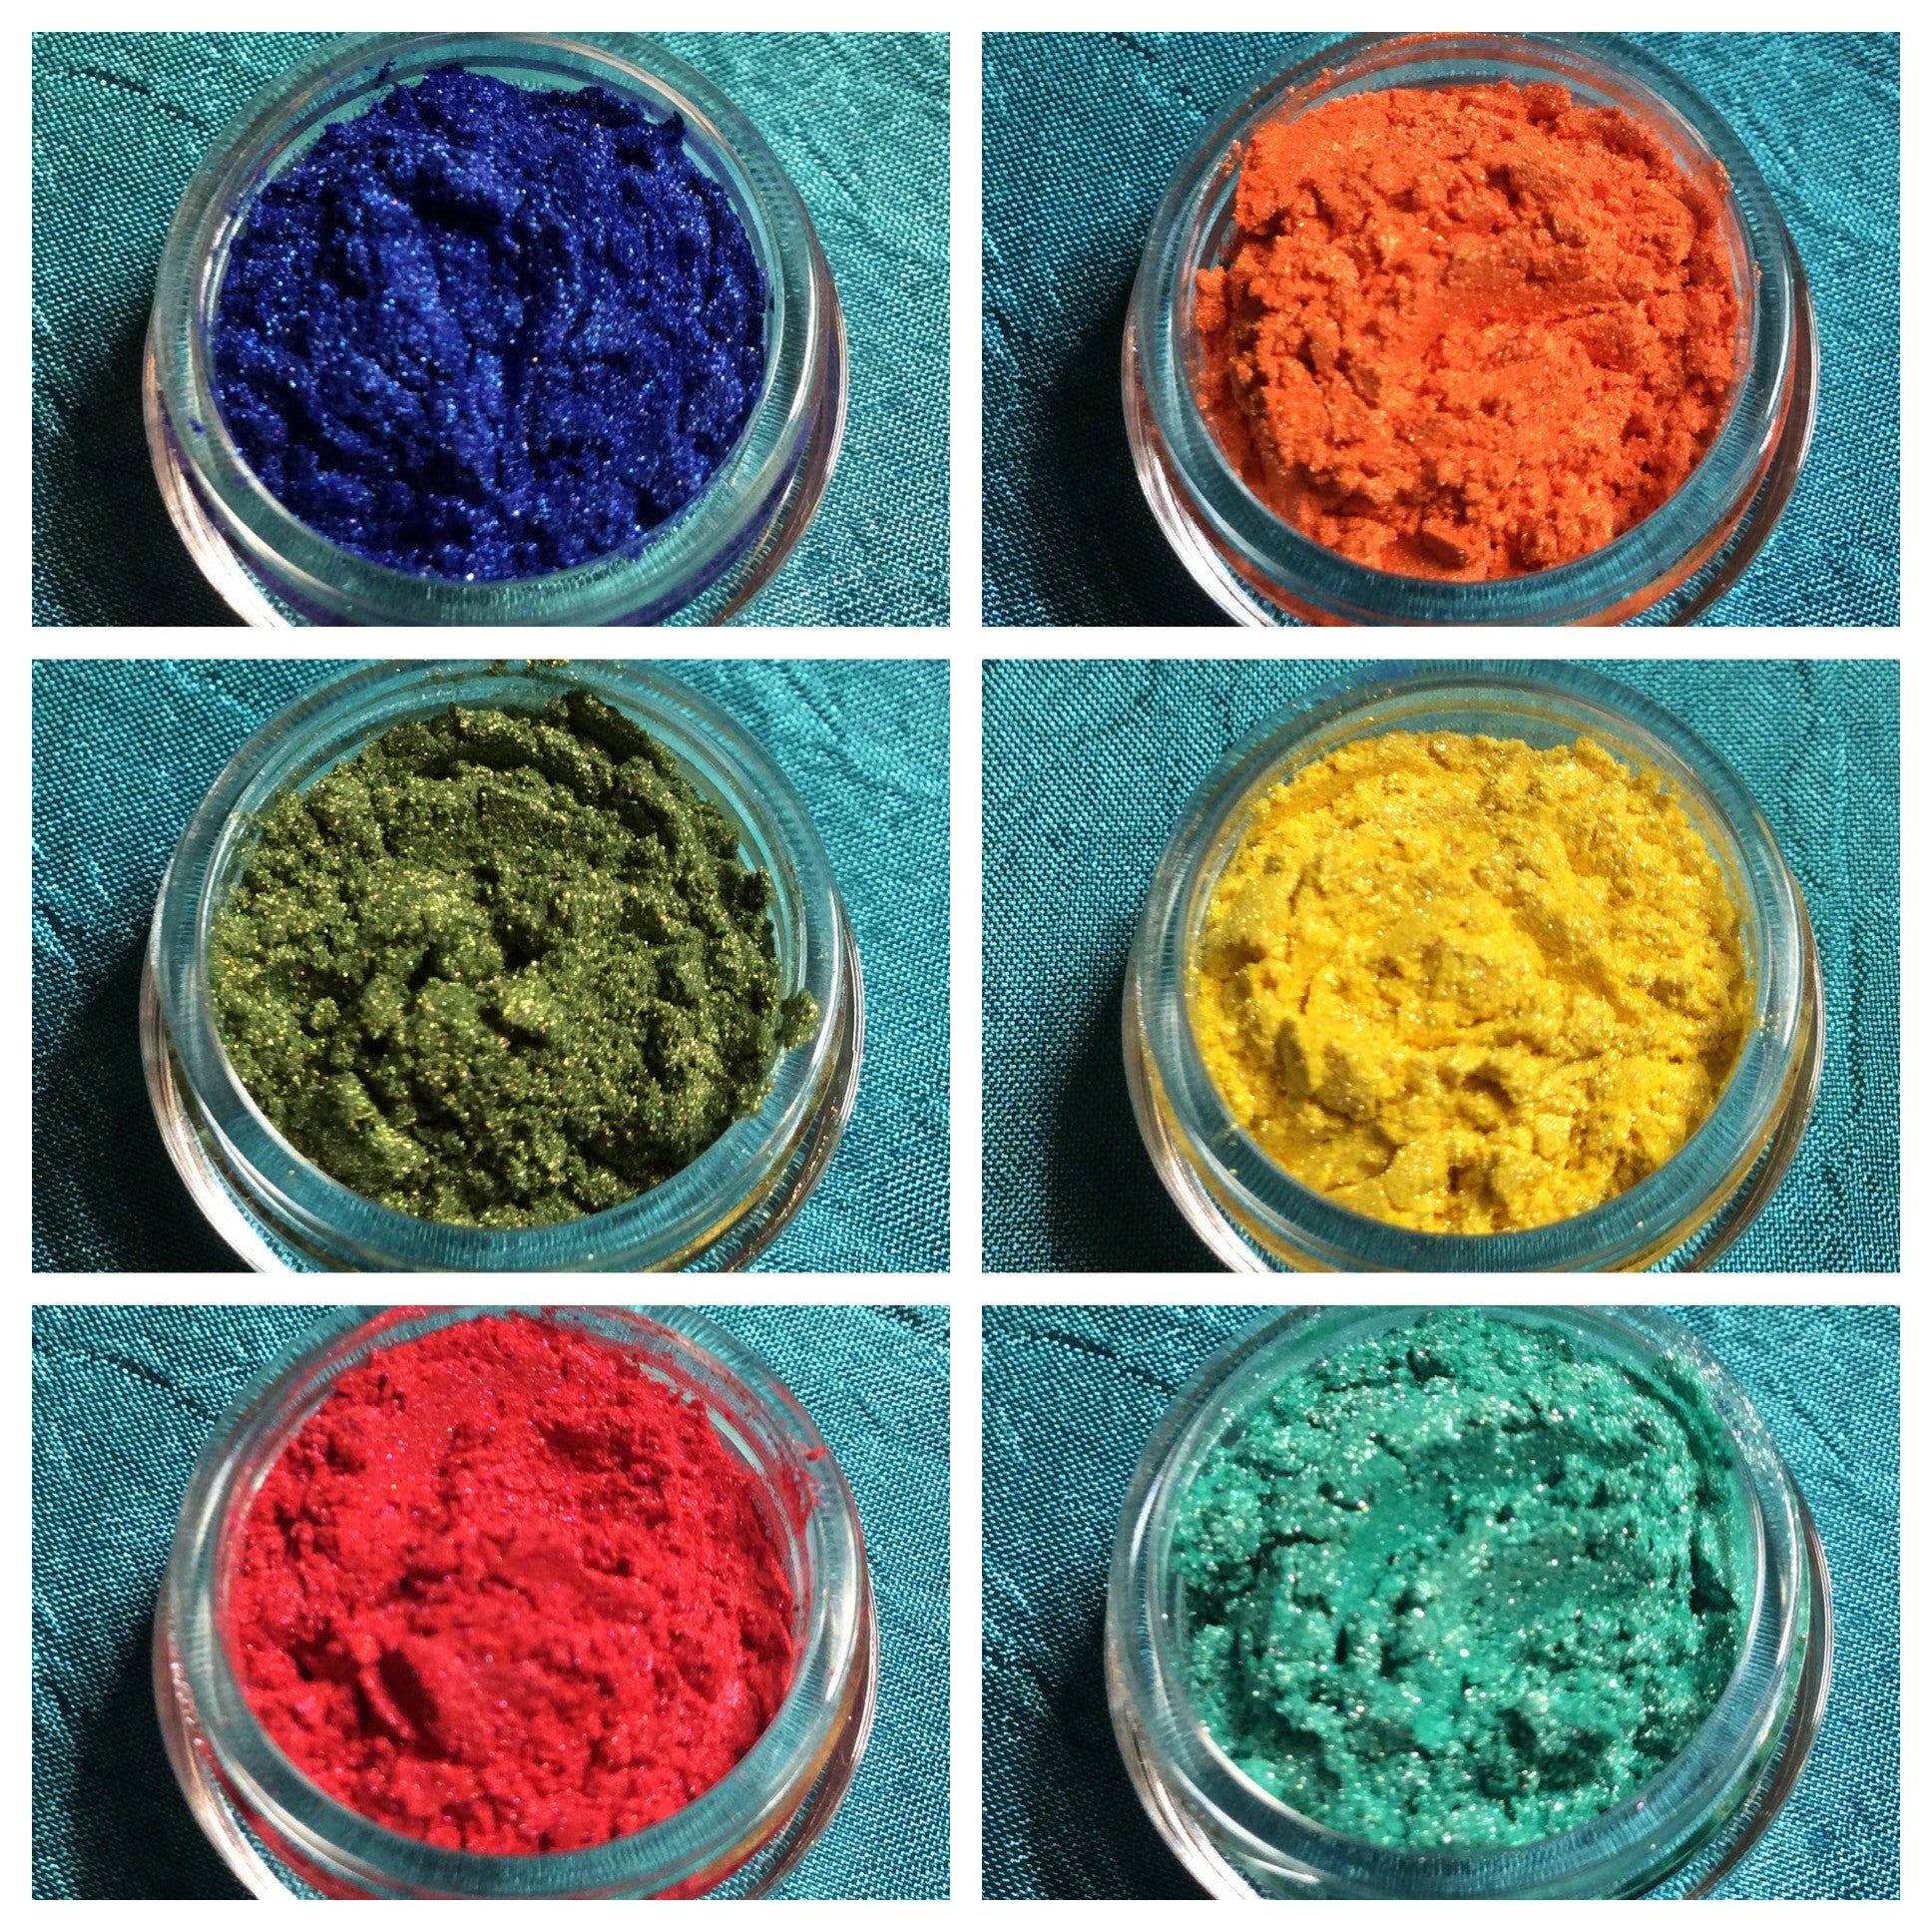 cheap wholesale mixed pigment art supplies